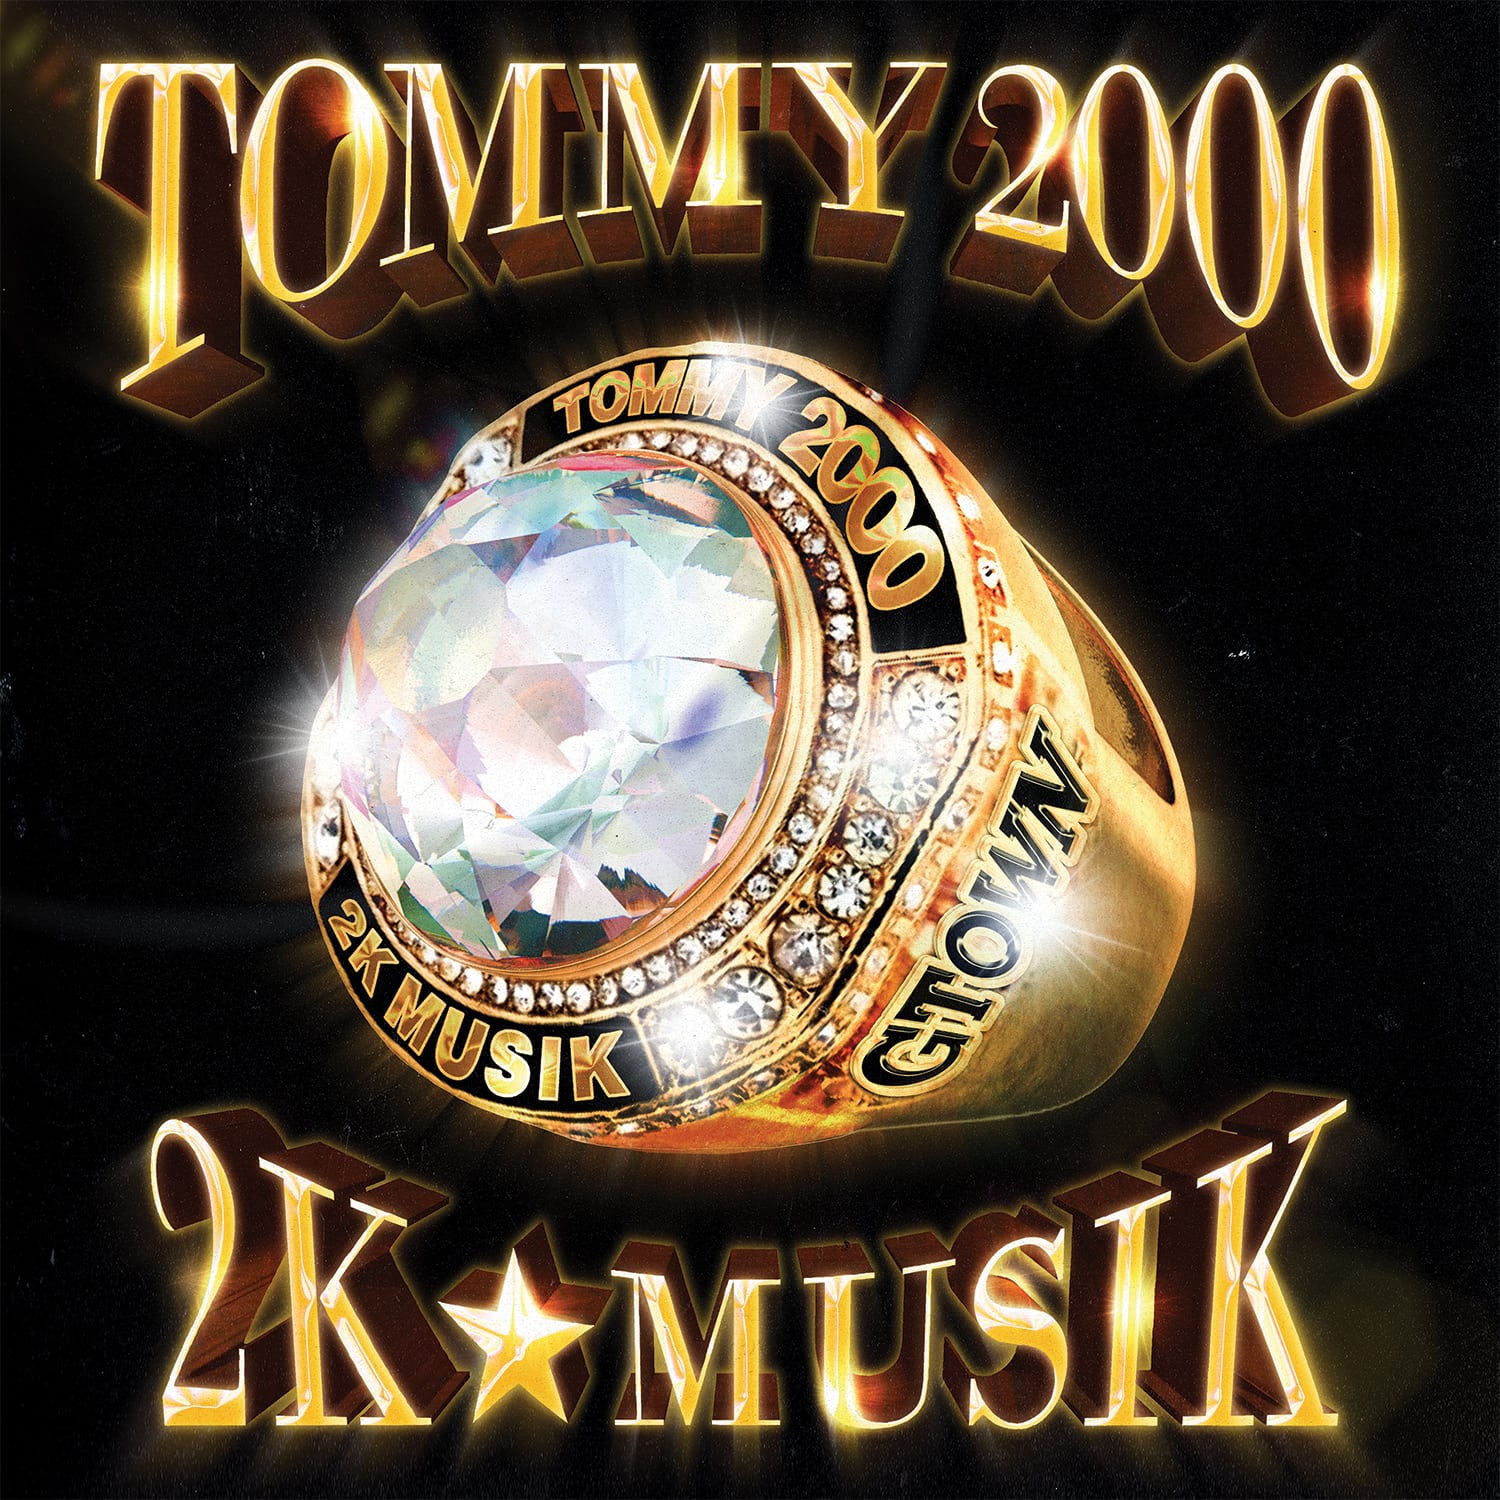 Tommy 2000 - 2K MUSIC